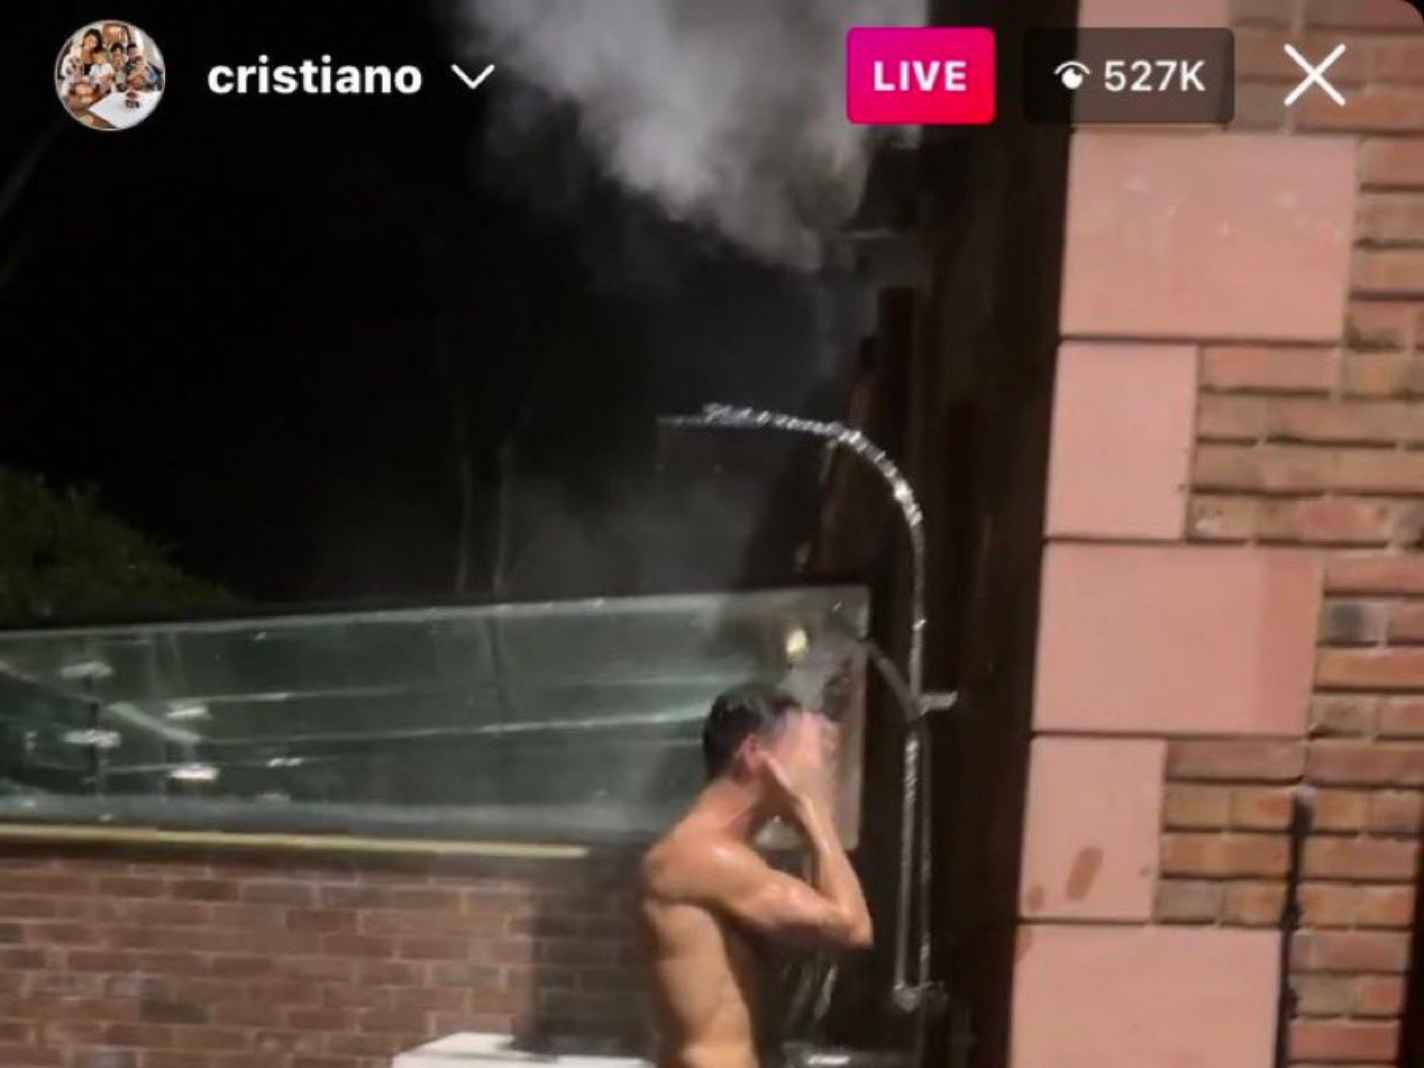 Cristiano Ronaldo gets too comfortable on Instagram Live